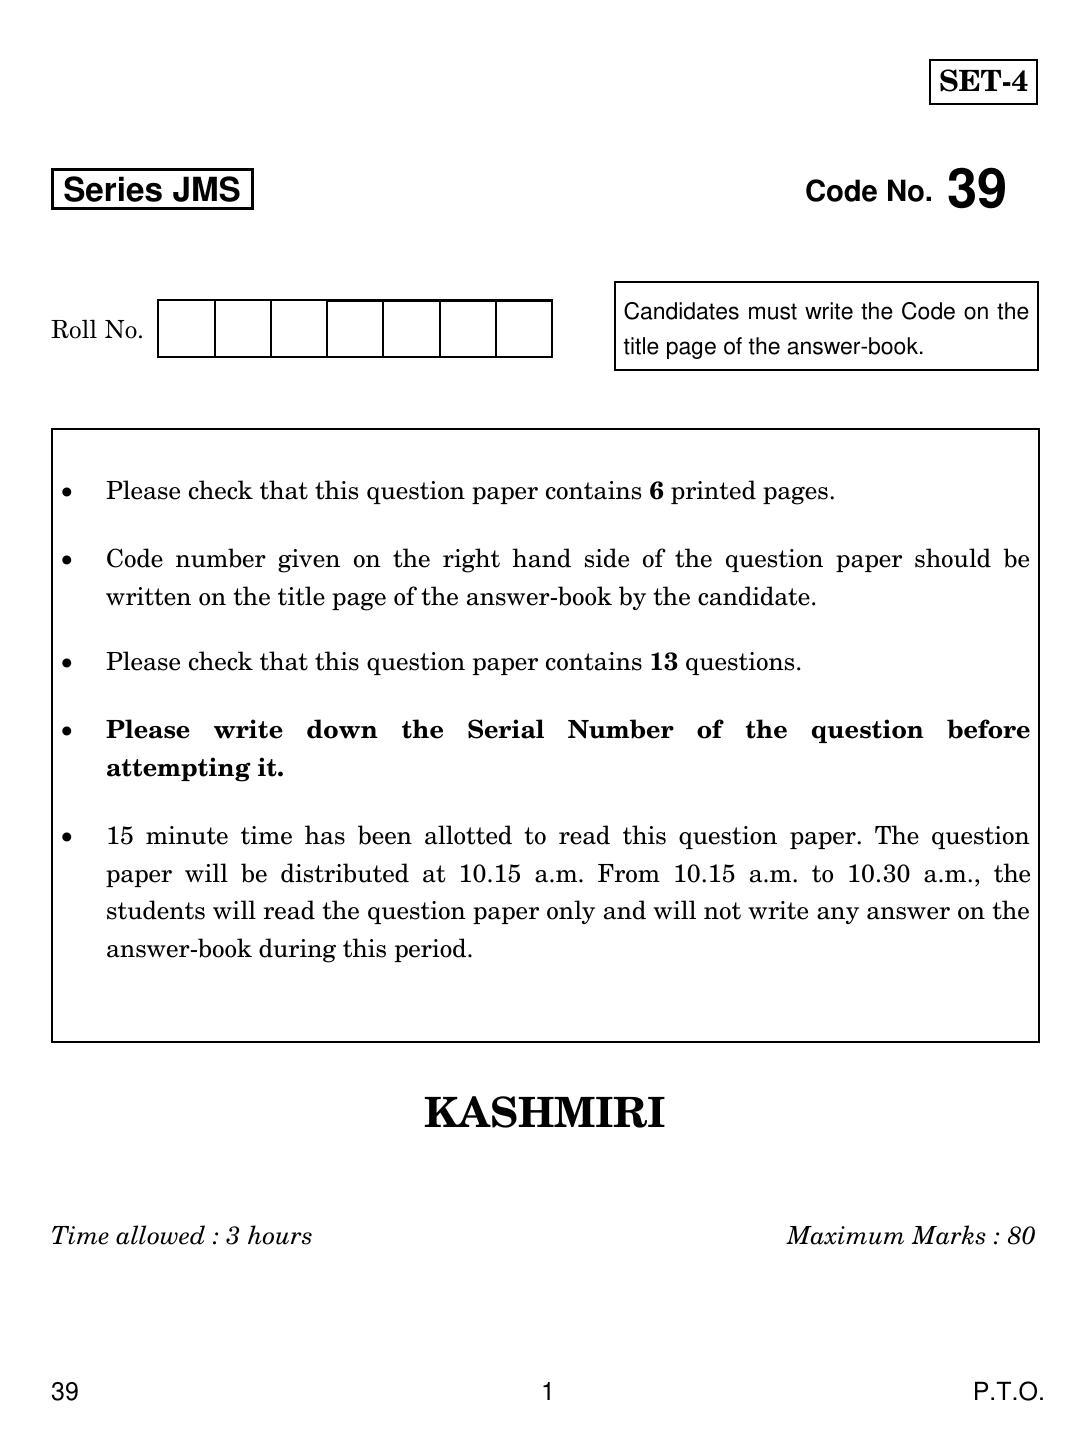 CBSE Class 10 39 Kashmiri 2019 Question Paper - Page 1